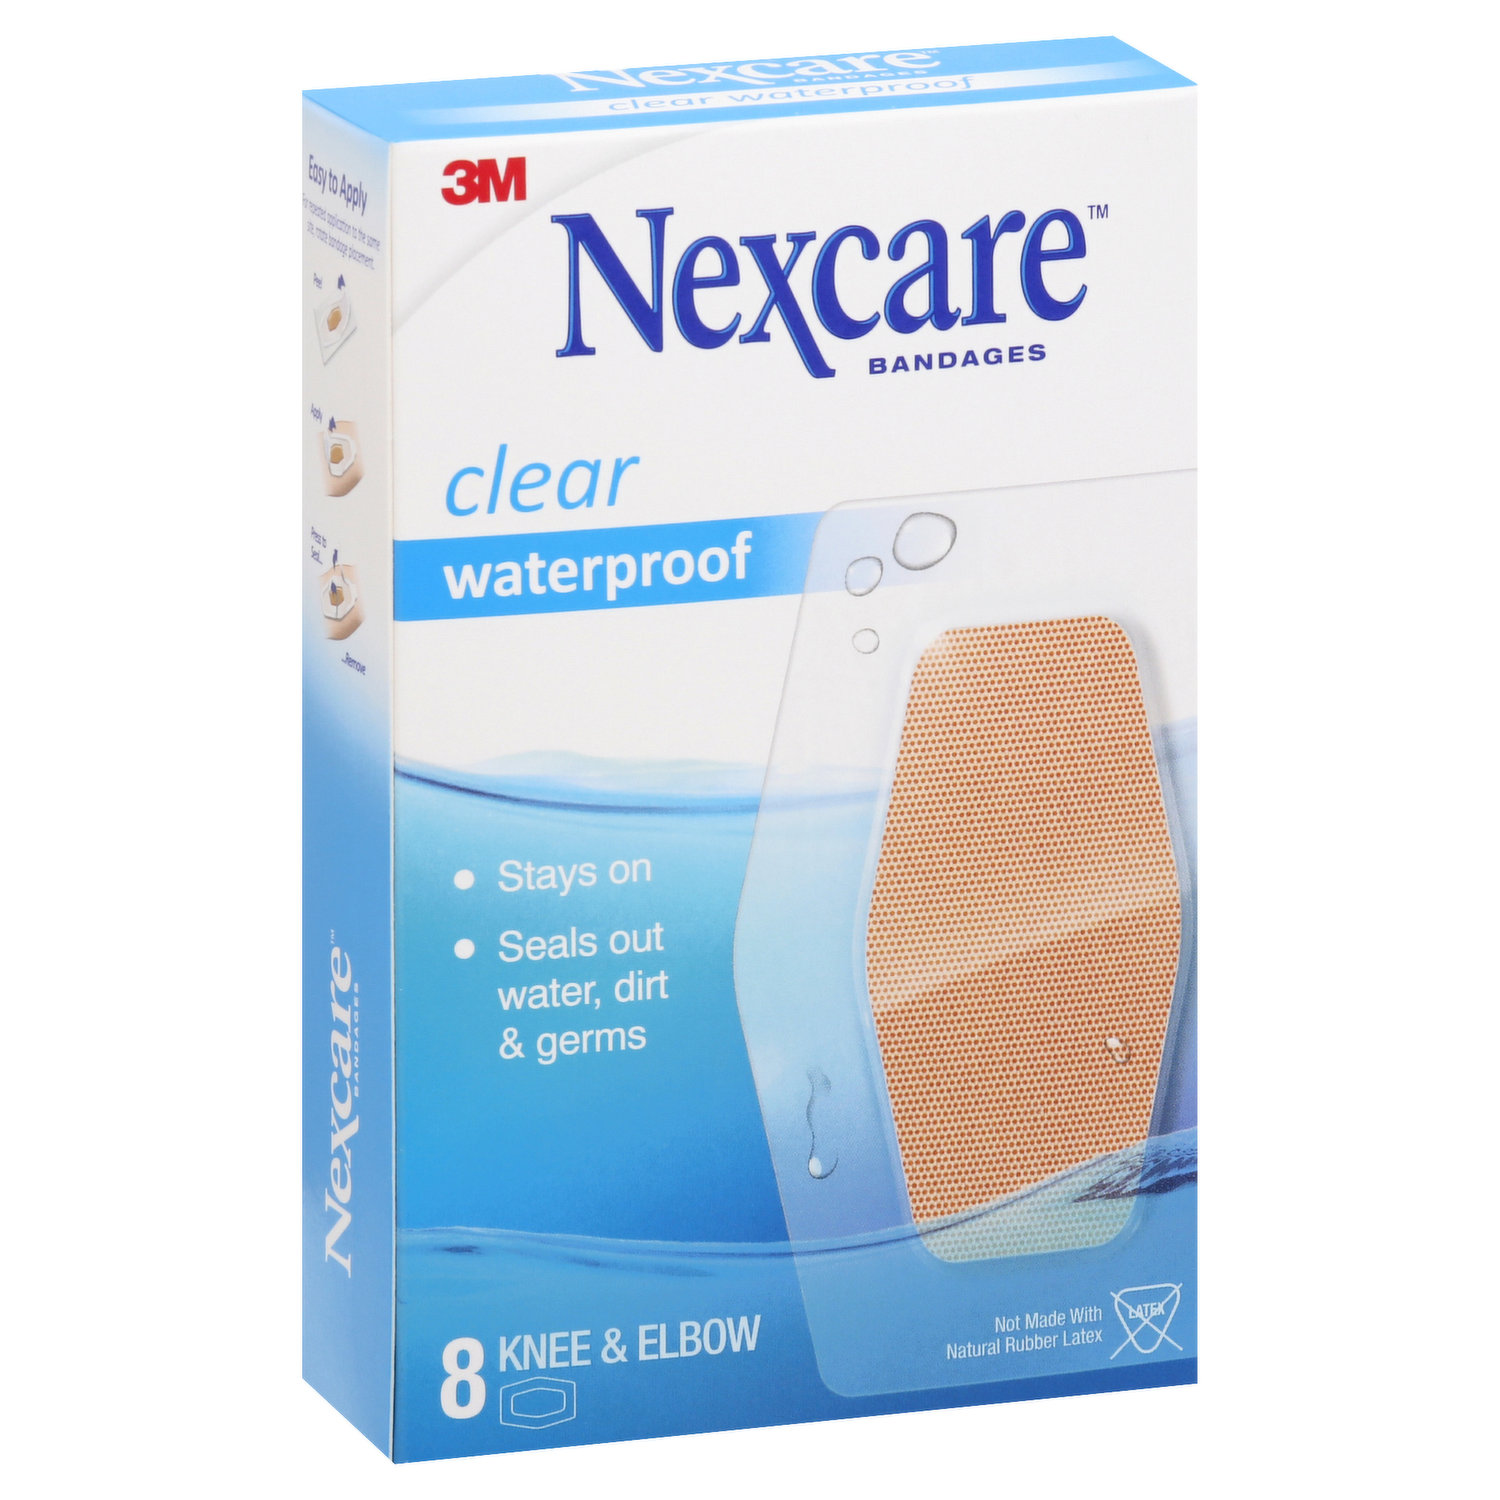 Nexcare 2 Non-Irritating Gentle Paper Tape Delivery - DoorDash